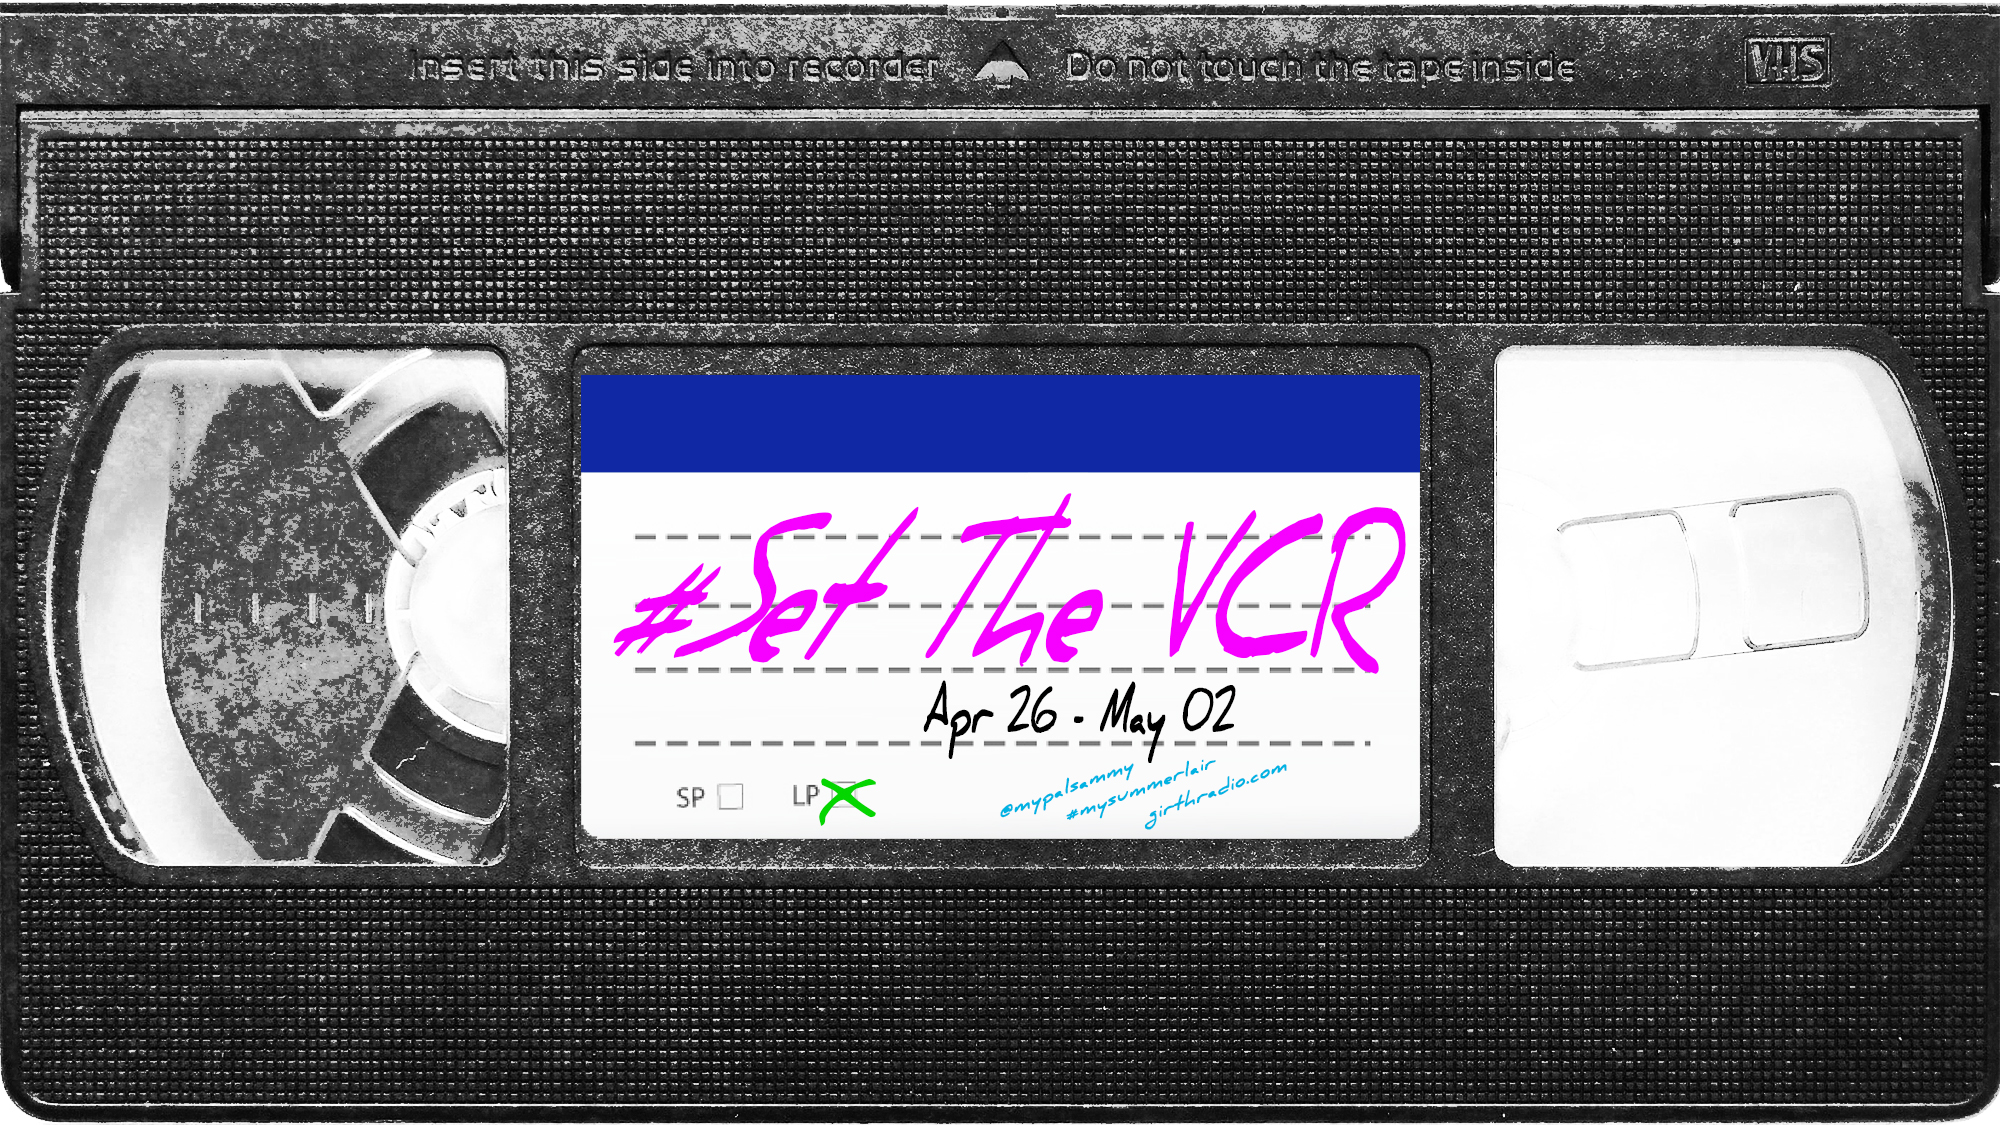 #SetTheVCR: April 26-May 2, 2020